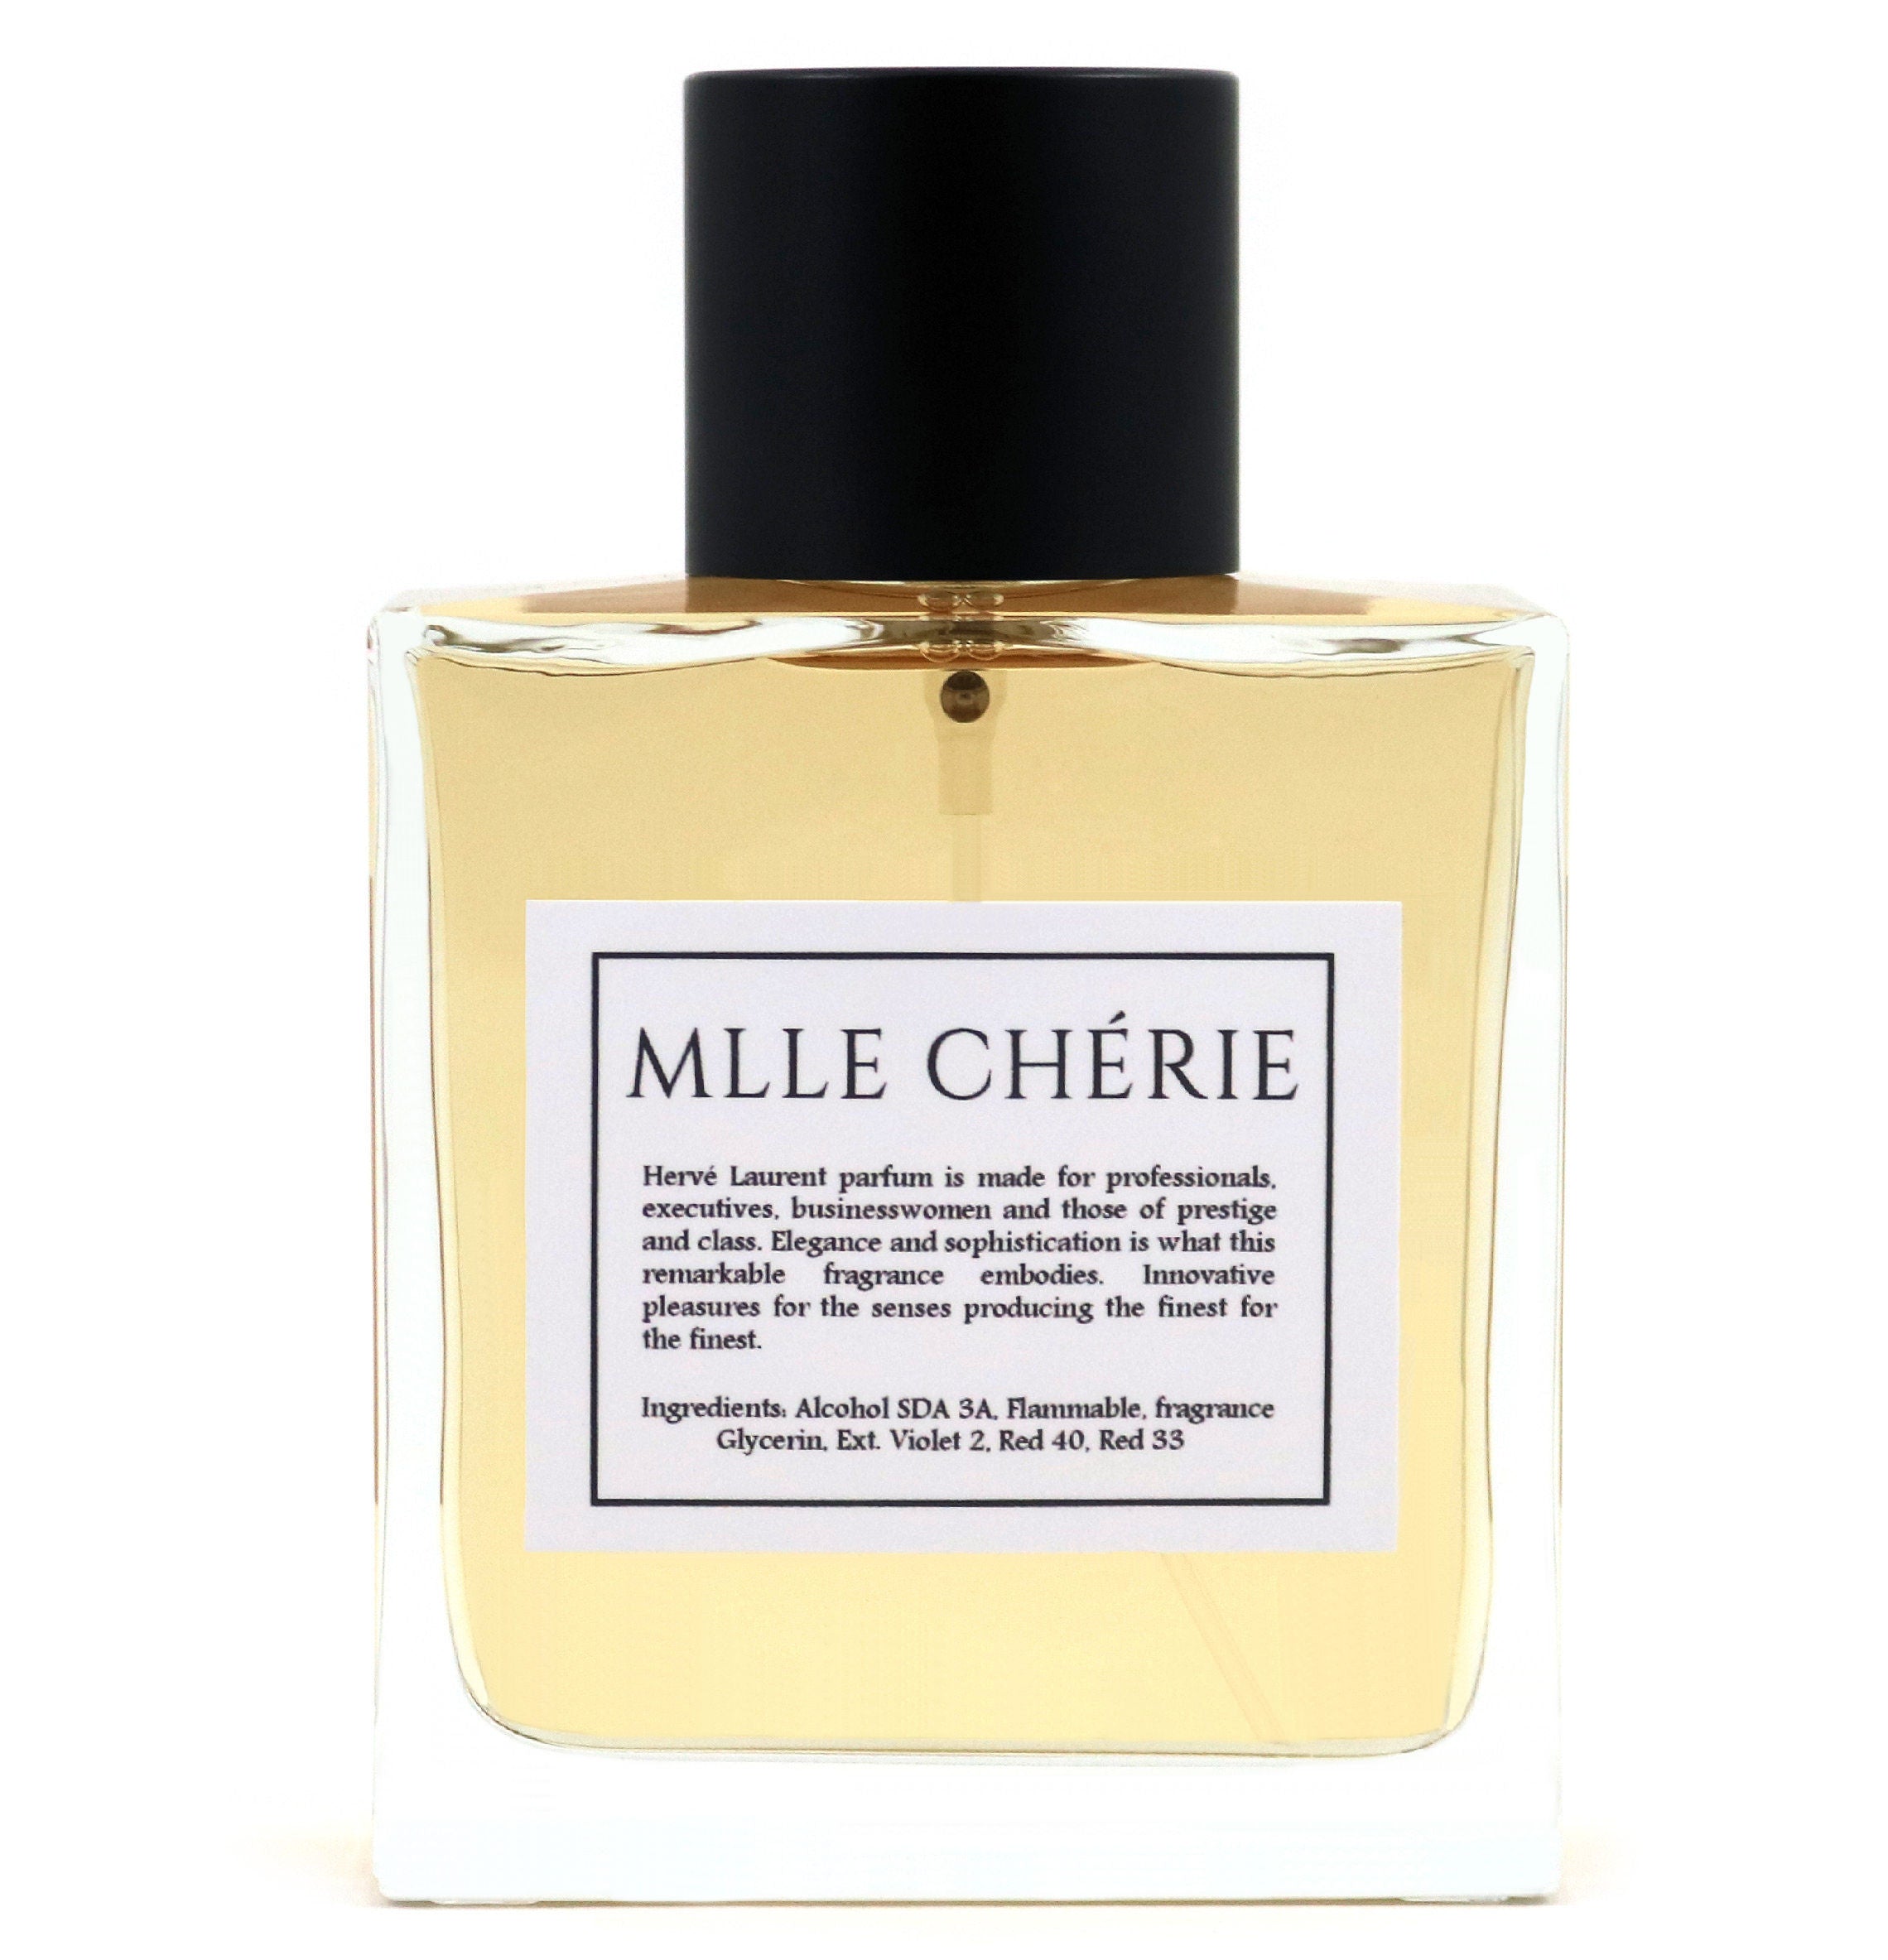 Herve Laurent, Perfume, Parfum, High End Luxury, Designer Fragrance, Fashion Fragrance, Mademoiselle